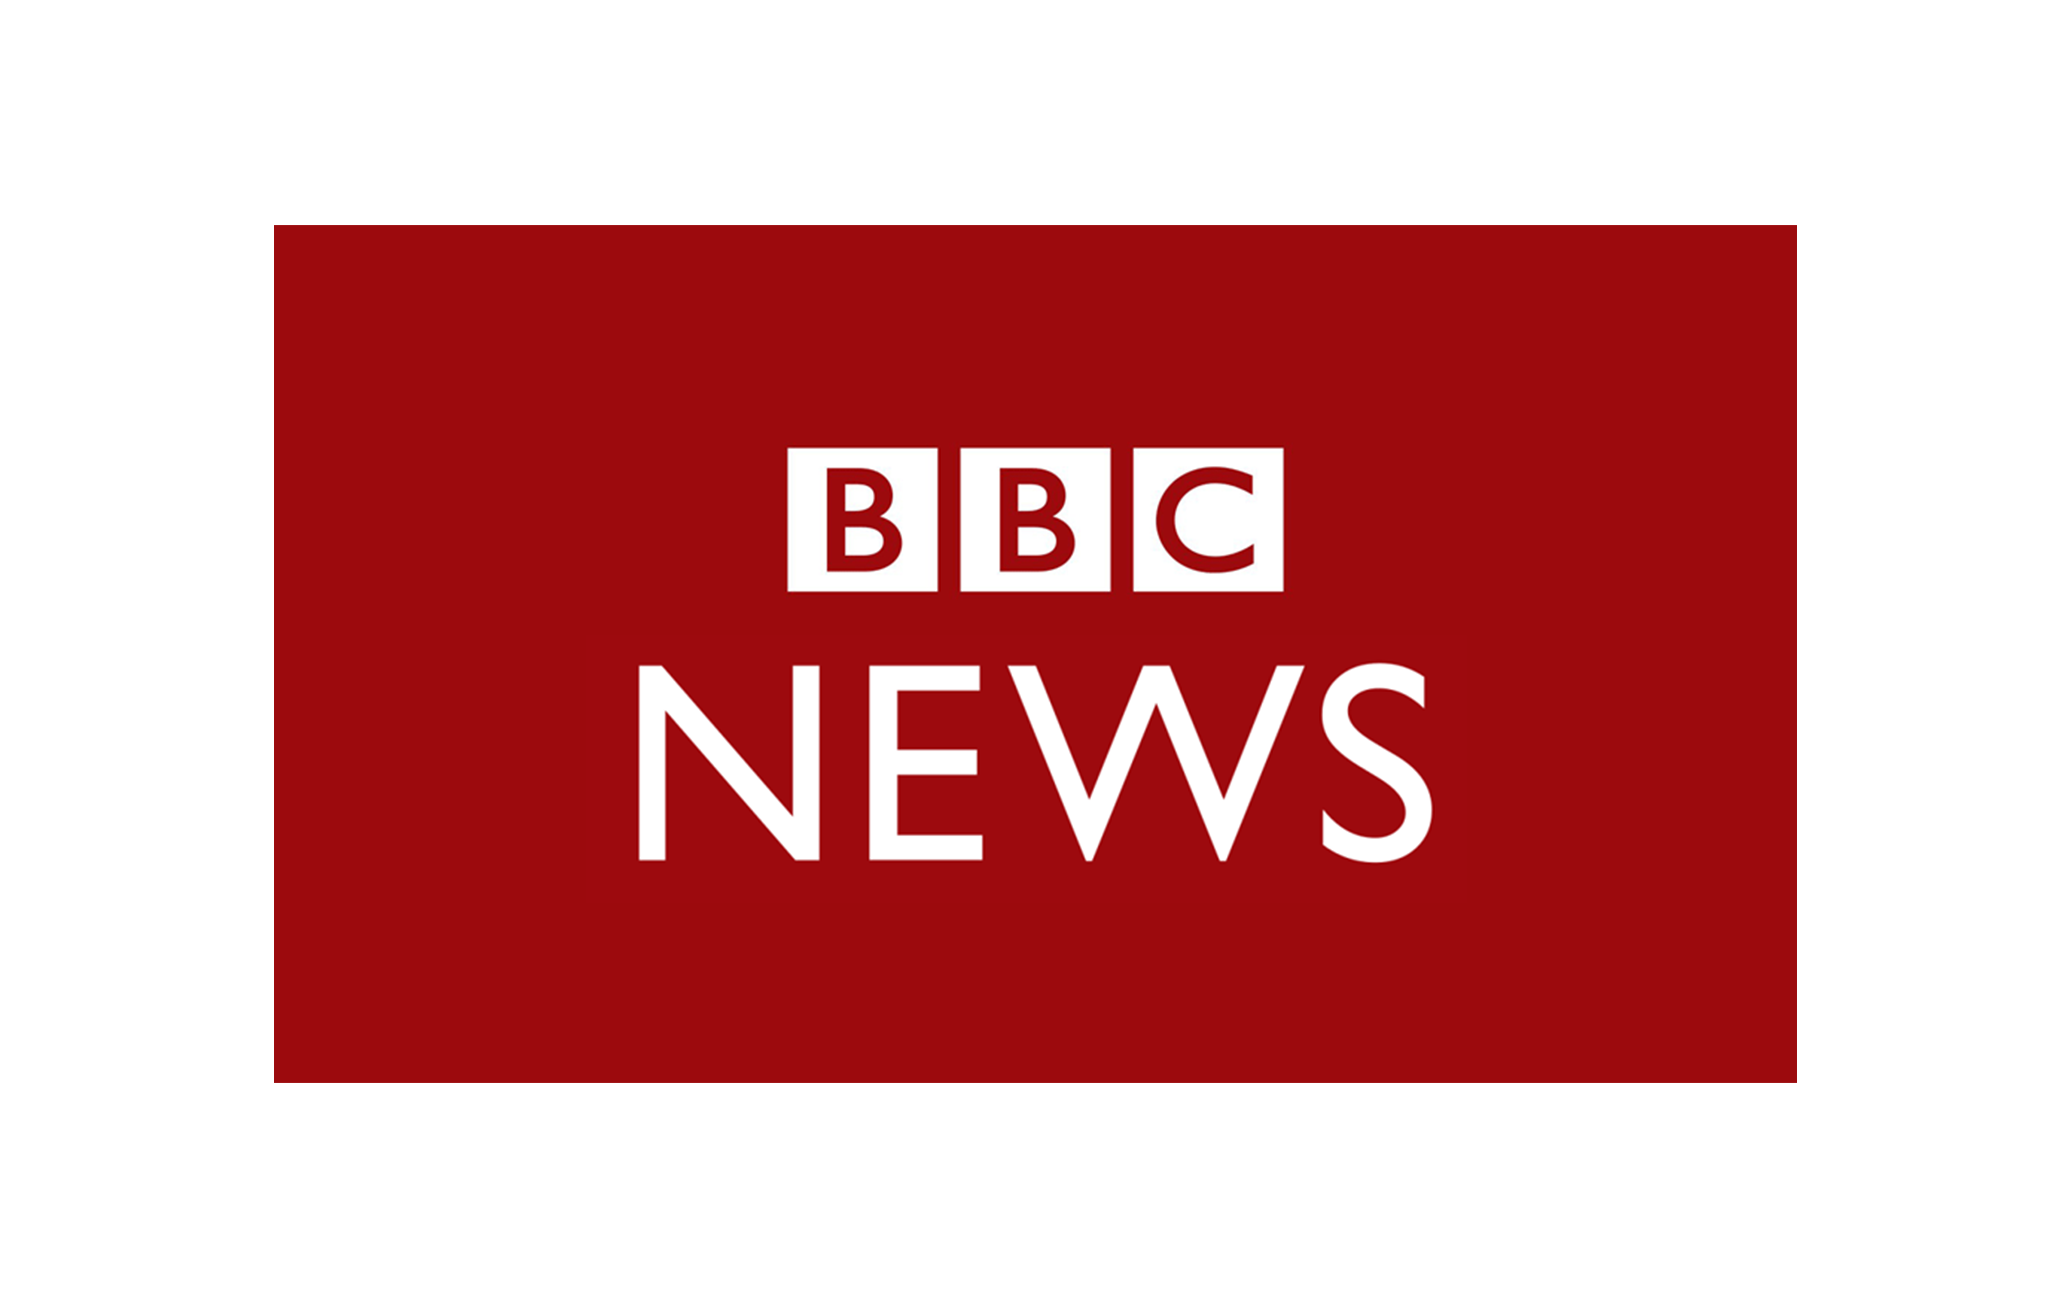 News Logos_v03 BBC News.png